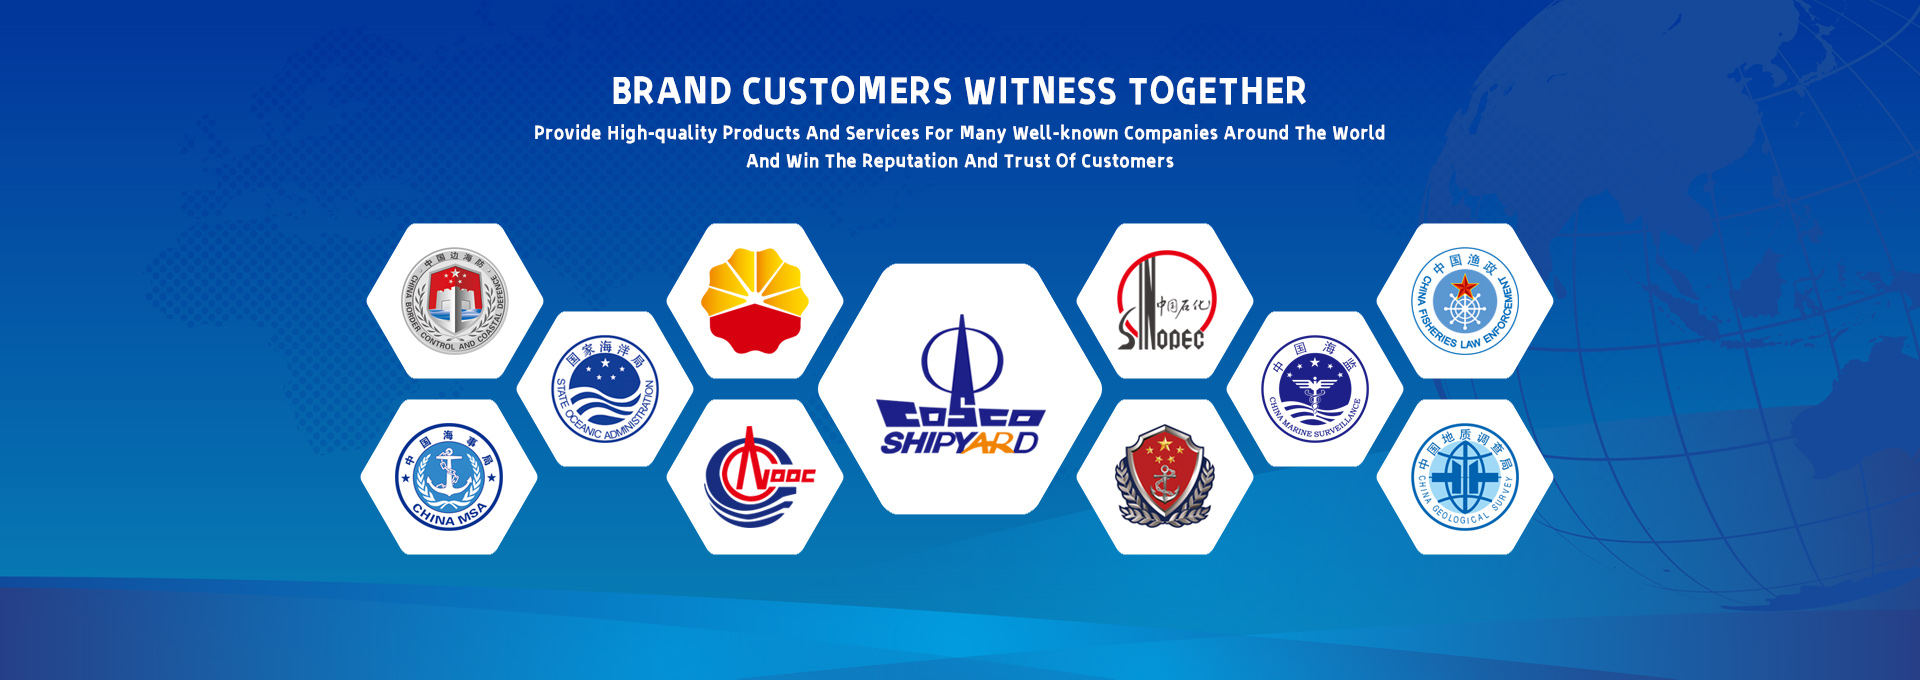 Brand Customers Witness Together